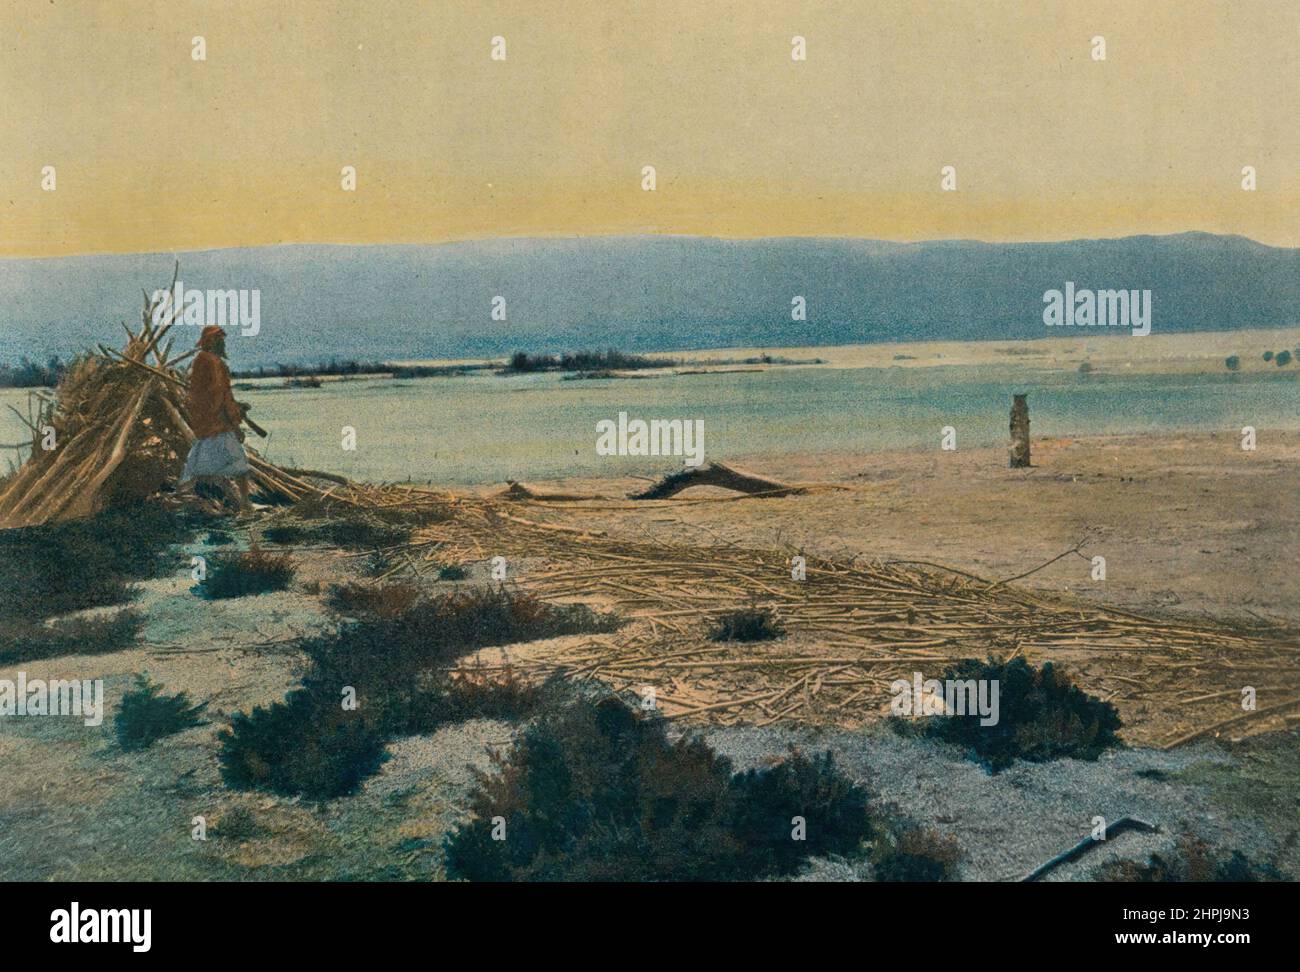 LA MER MORTE A L'EMBOUCHURE DU JOURDAIN. Autour Du Monde Terre Sainte 1895 - 1900 (1) - 19. Jahrhundert französischer Farbfotografiedruck Stockfoto